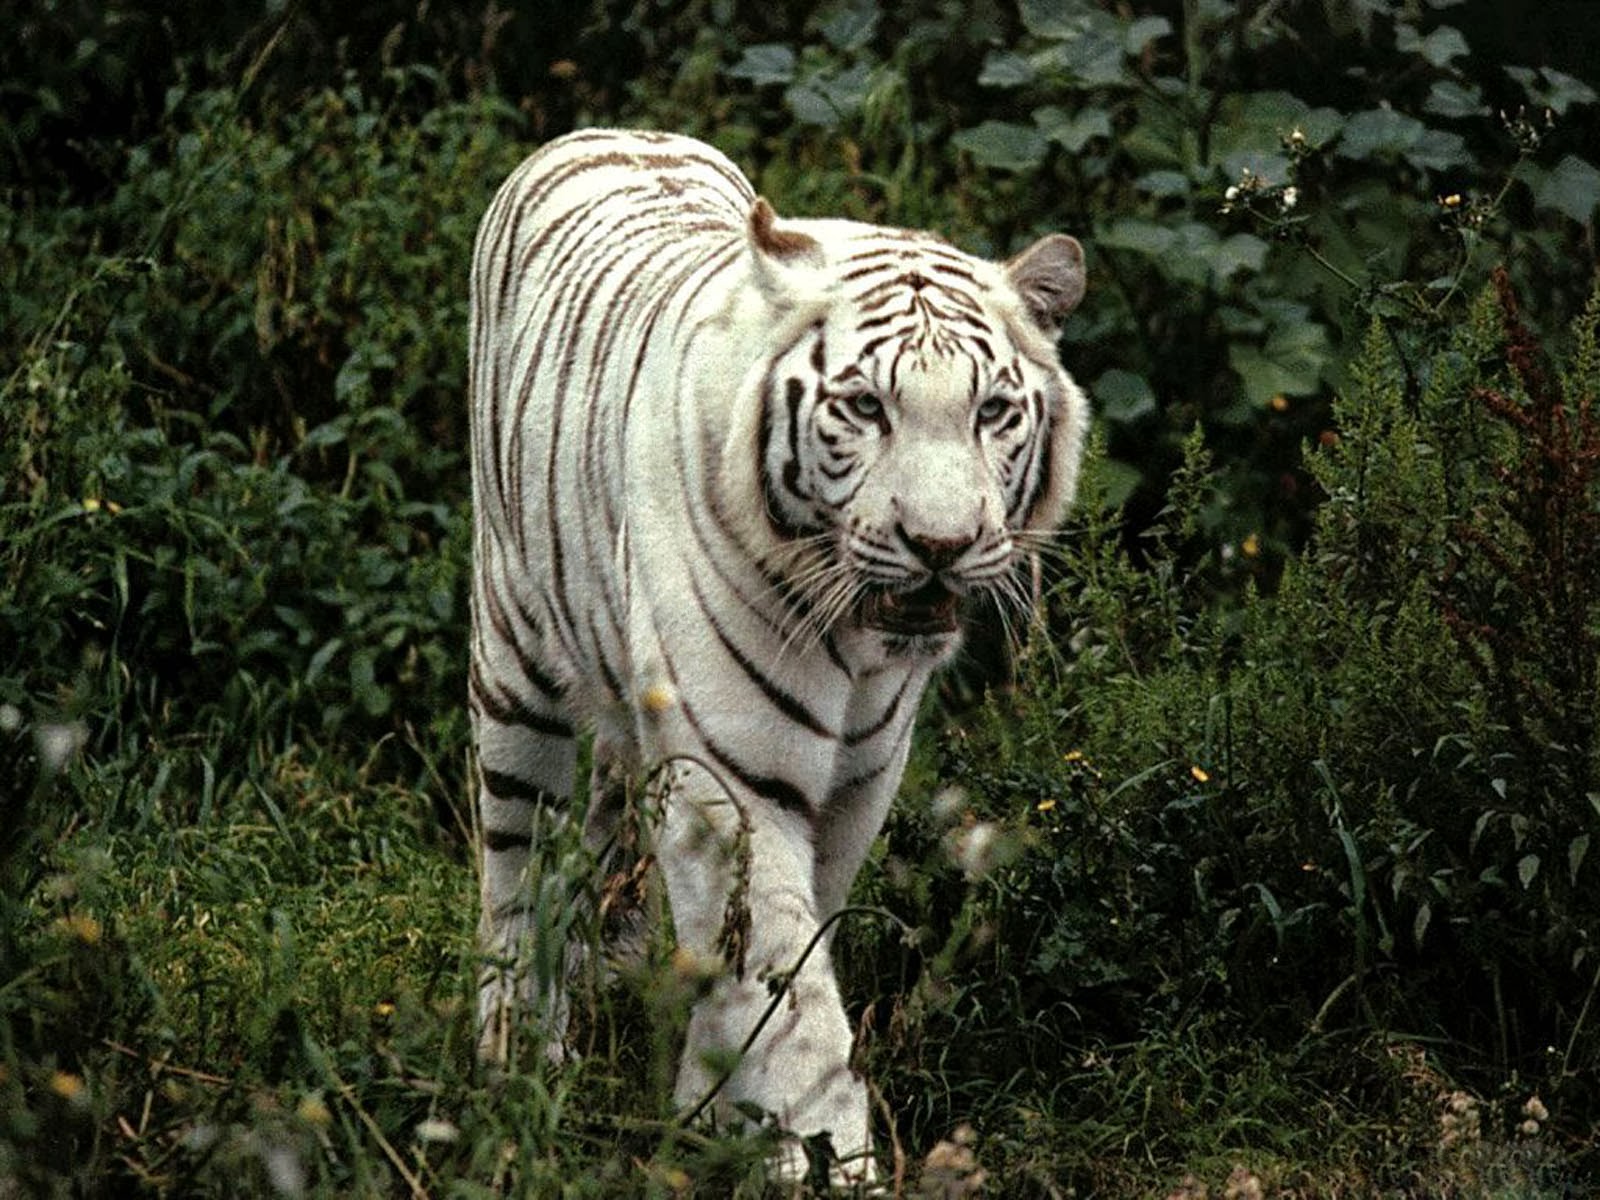  White Tiger Wallpapers White Tiger Desktop Wallpapers White Tiger